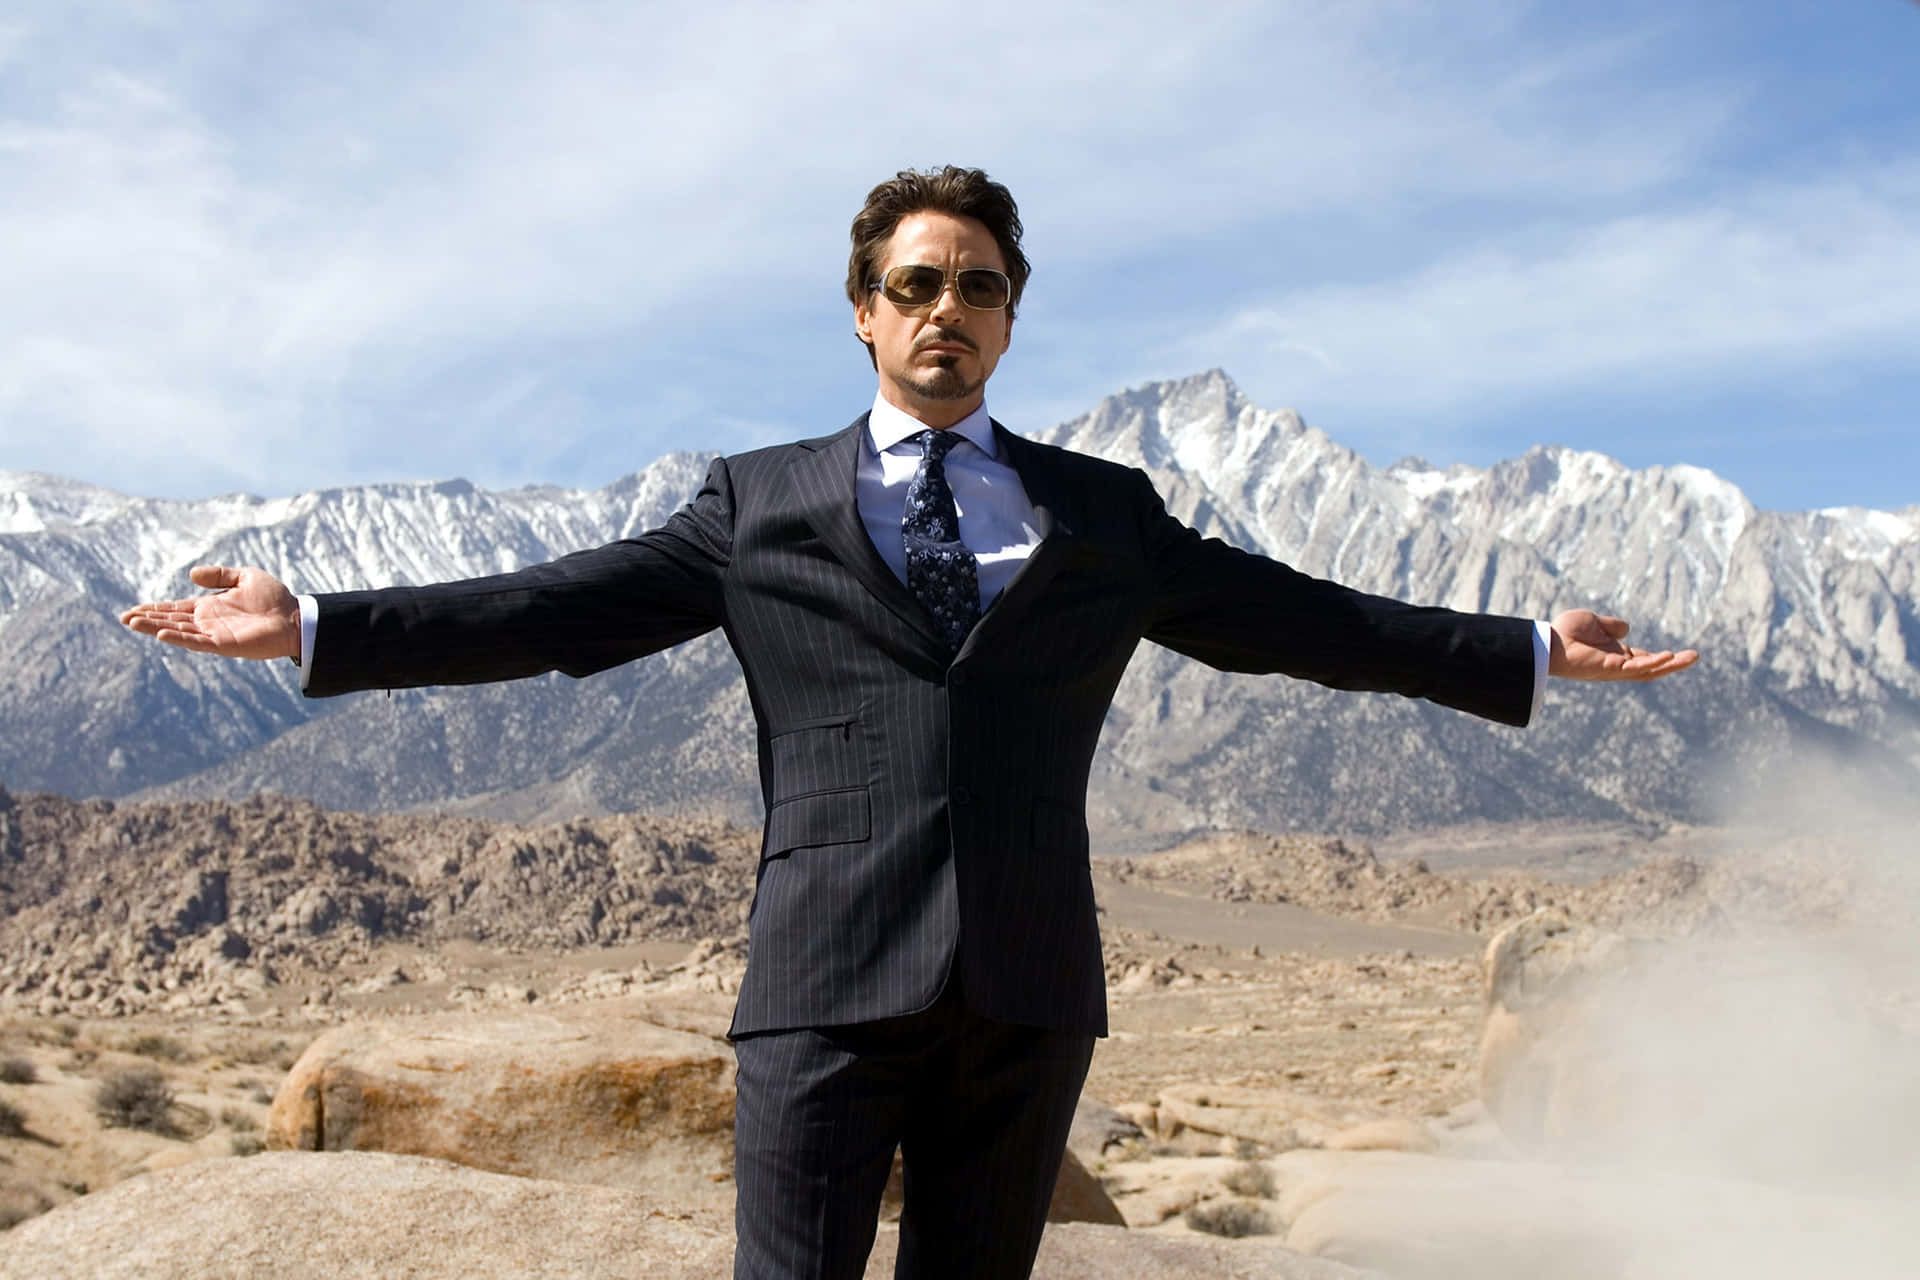 Iron Man Robert Downey Jr In Desert Picture